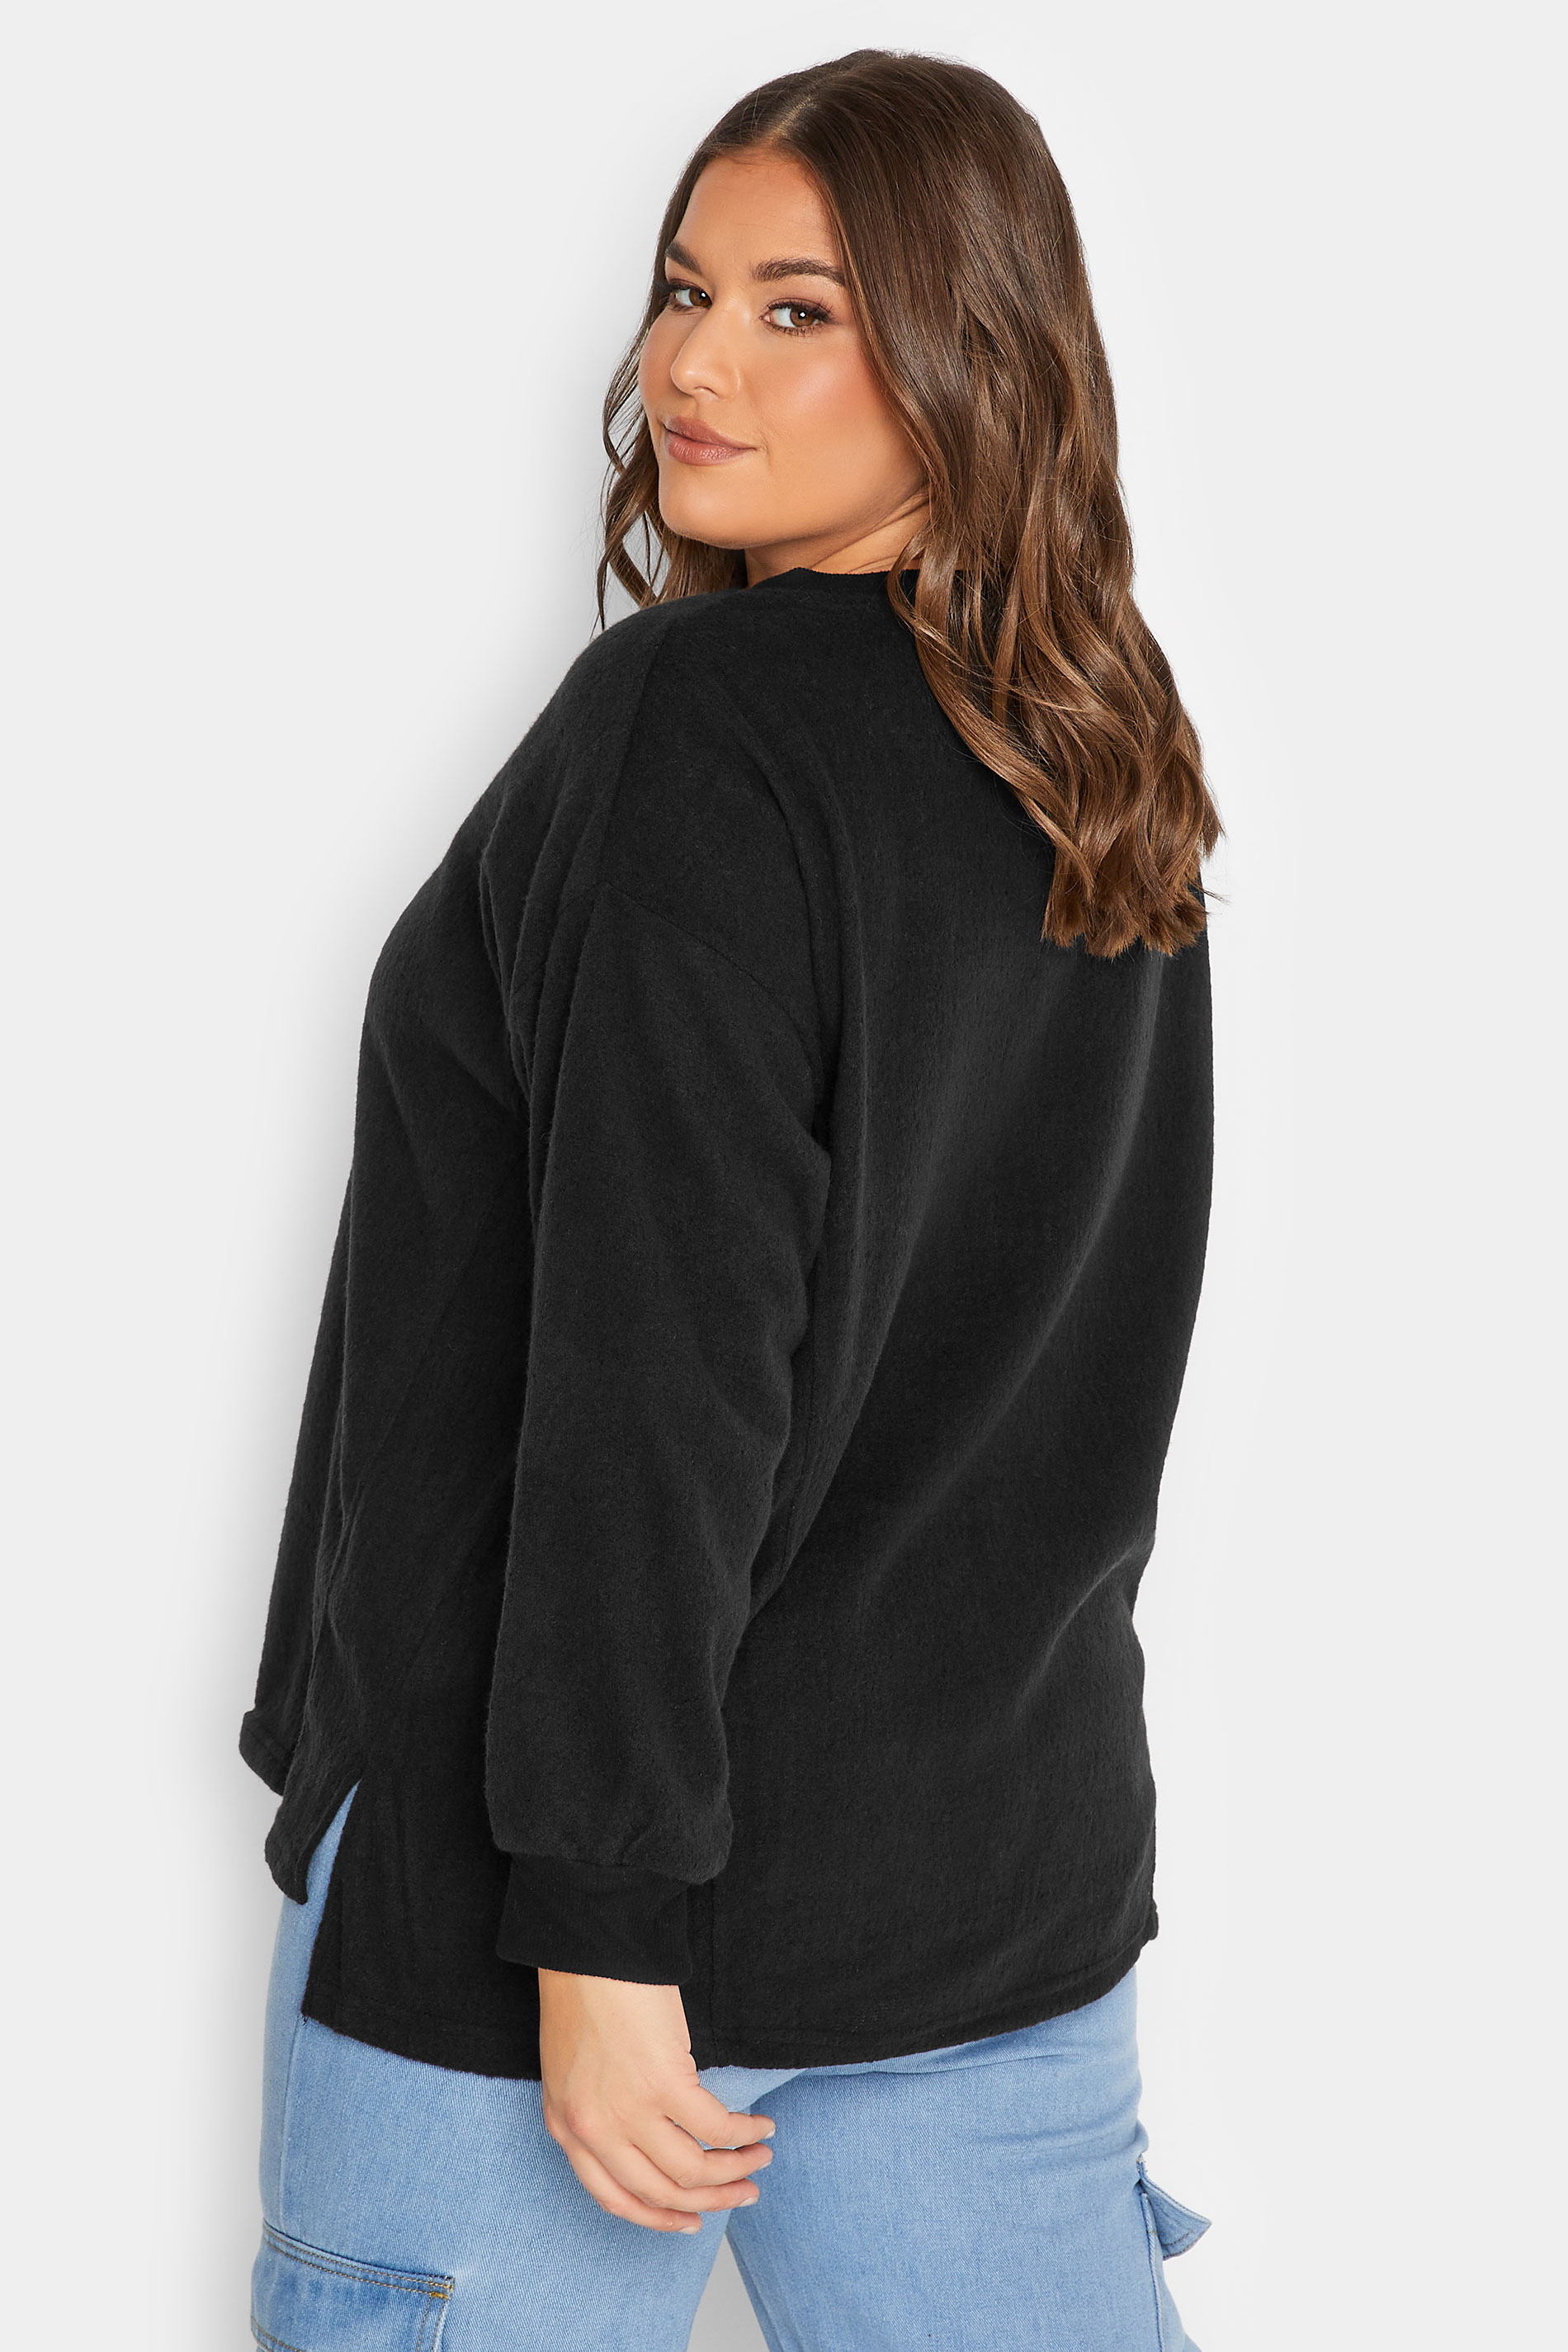 Plus Size Black V-Neck Soft Touch Fleece Sweatshirt | Yours Clothing 3